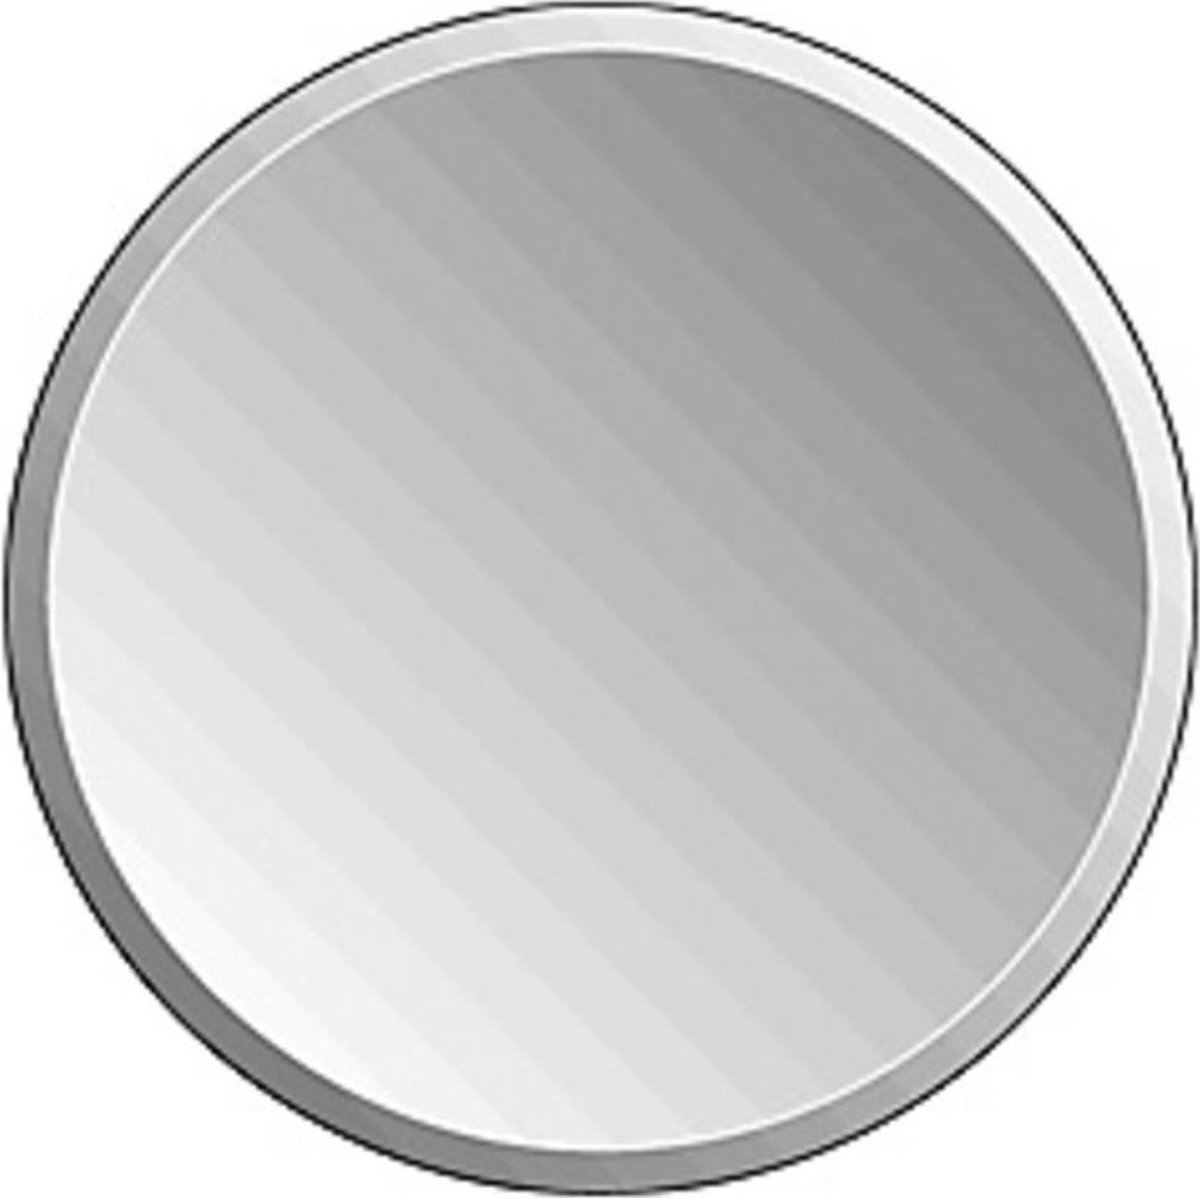 Kantine markt Opnemen Plieger Charleston 4mm ronde spiegel met facetrand O 50cm zilver | bol.com